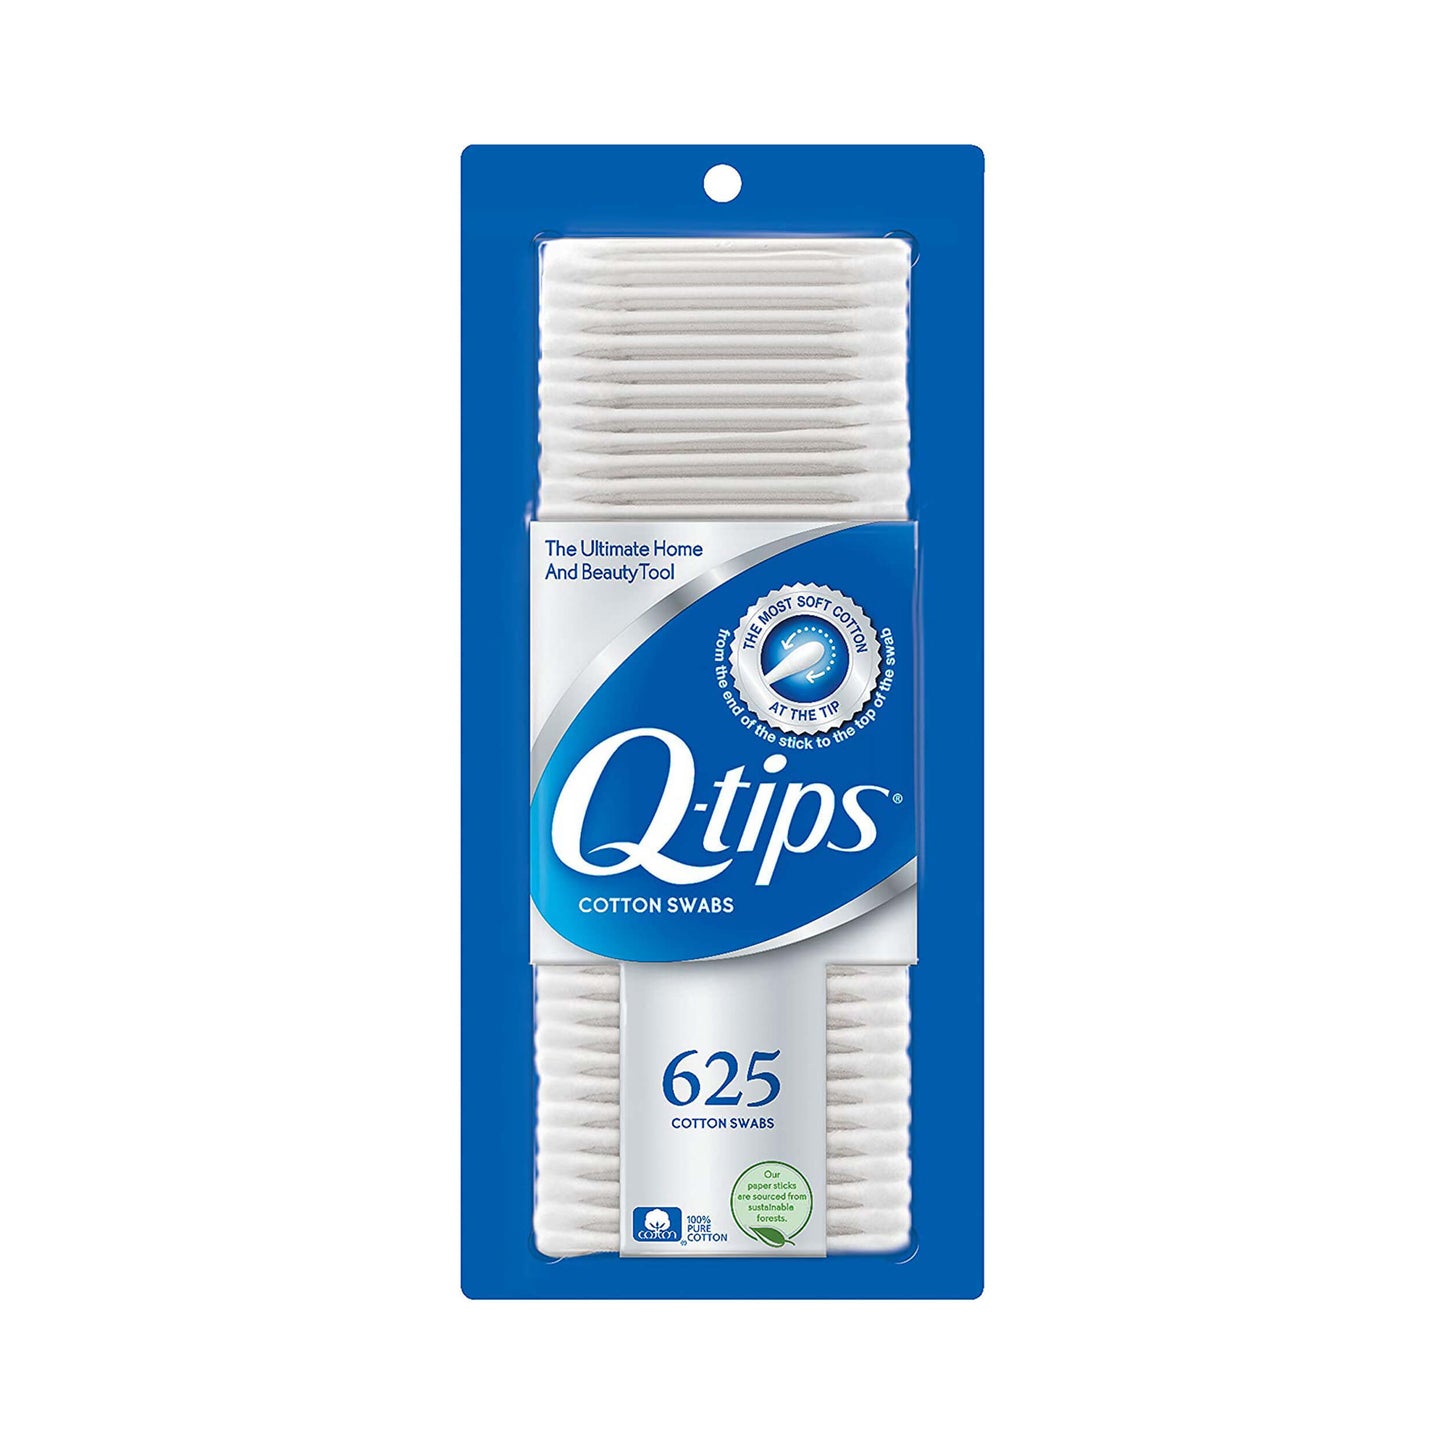 Q-tips Cotton Swabs 625 Ct